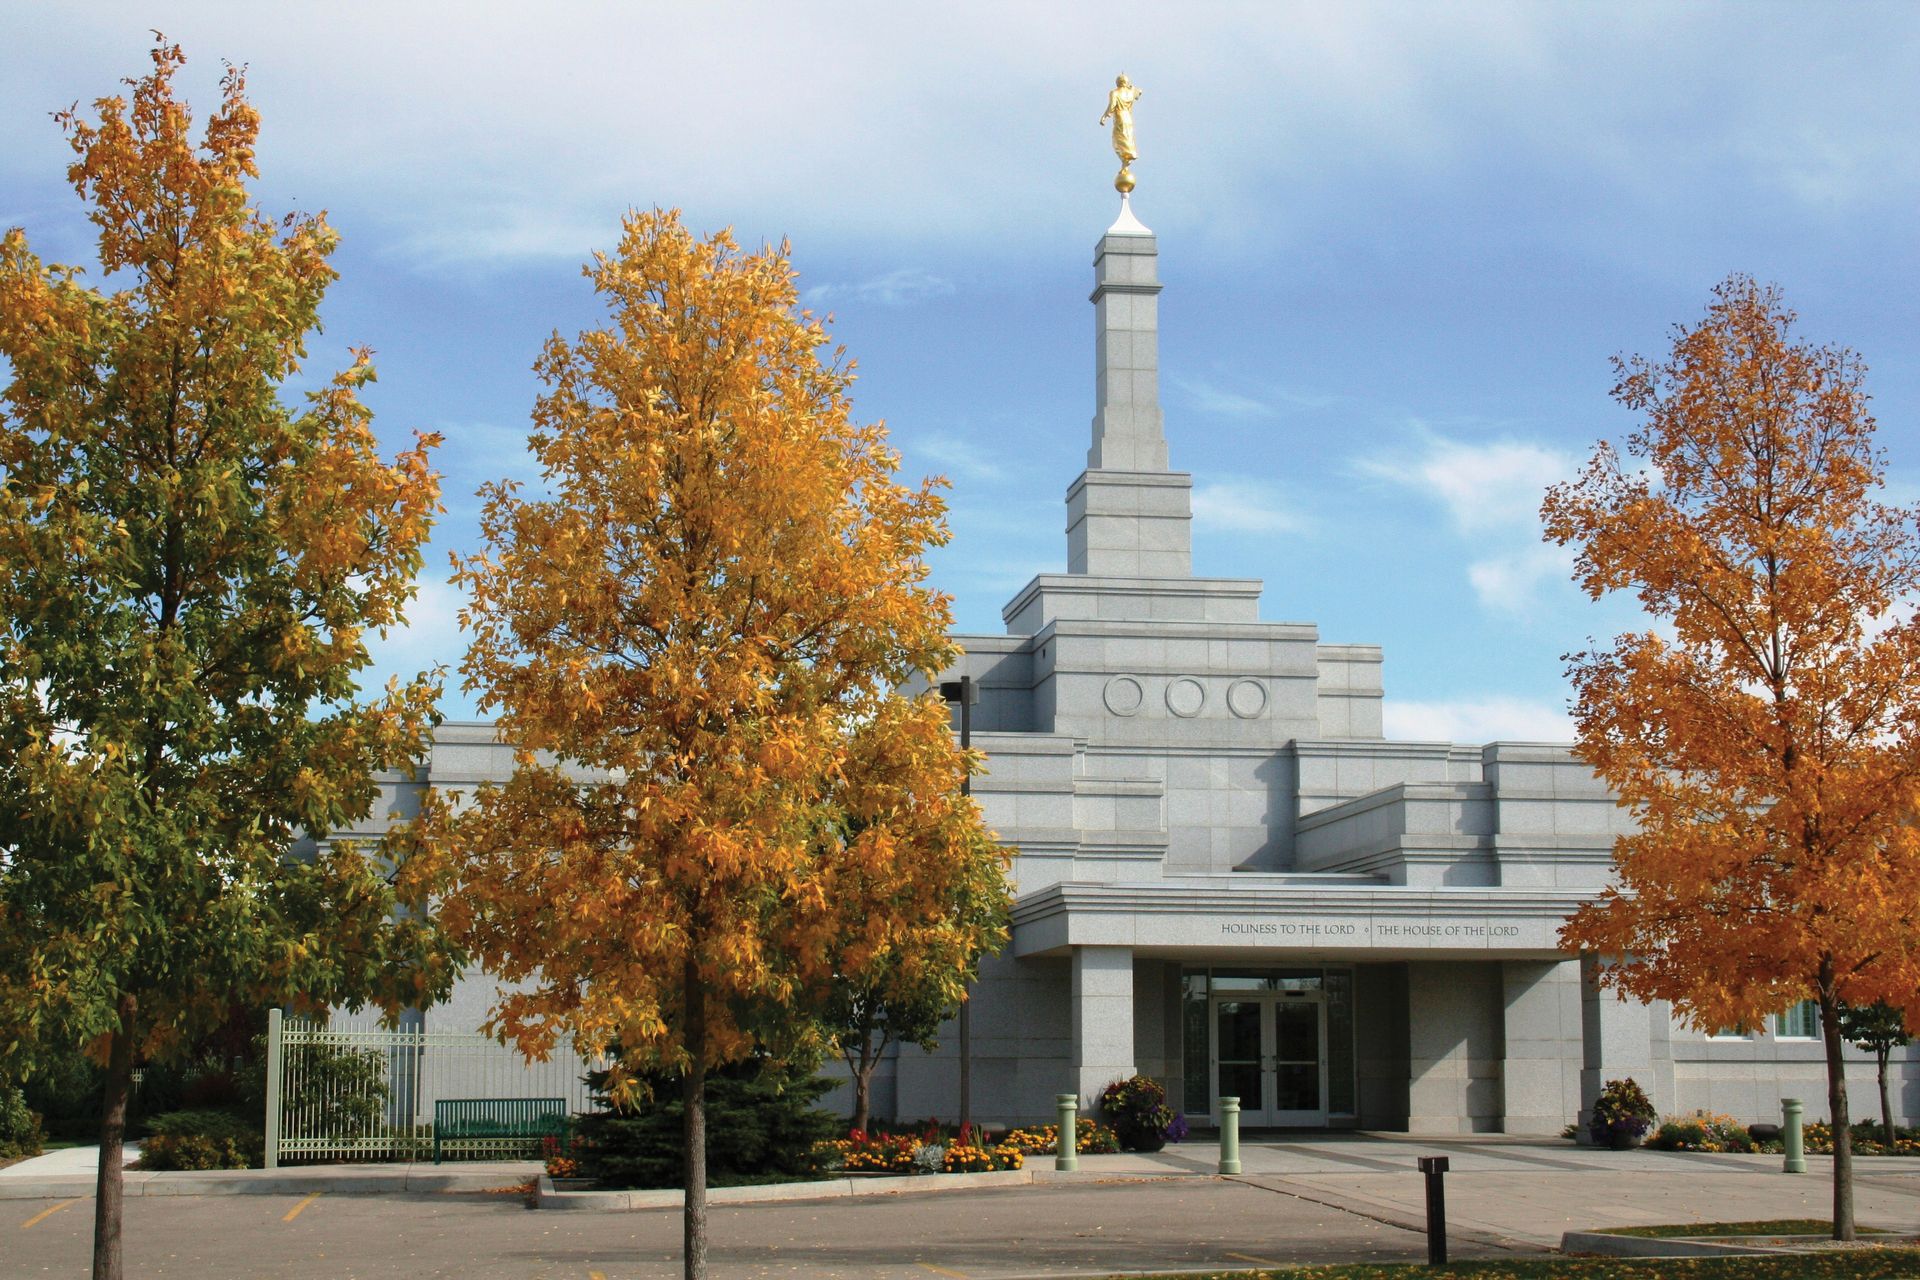 The Regina Saskatchewan Temple entrance and scenery.